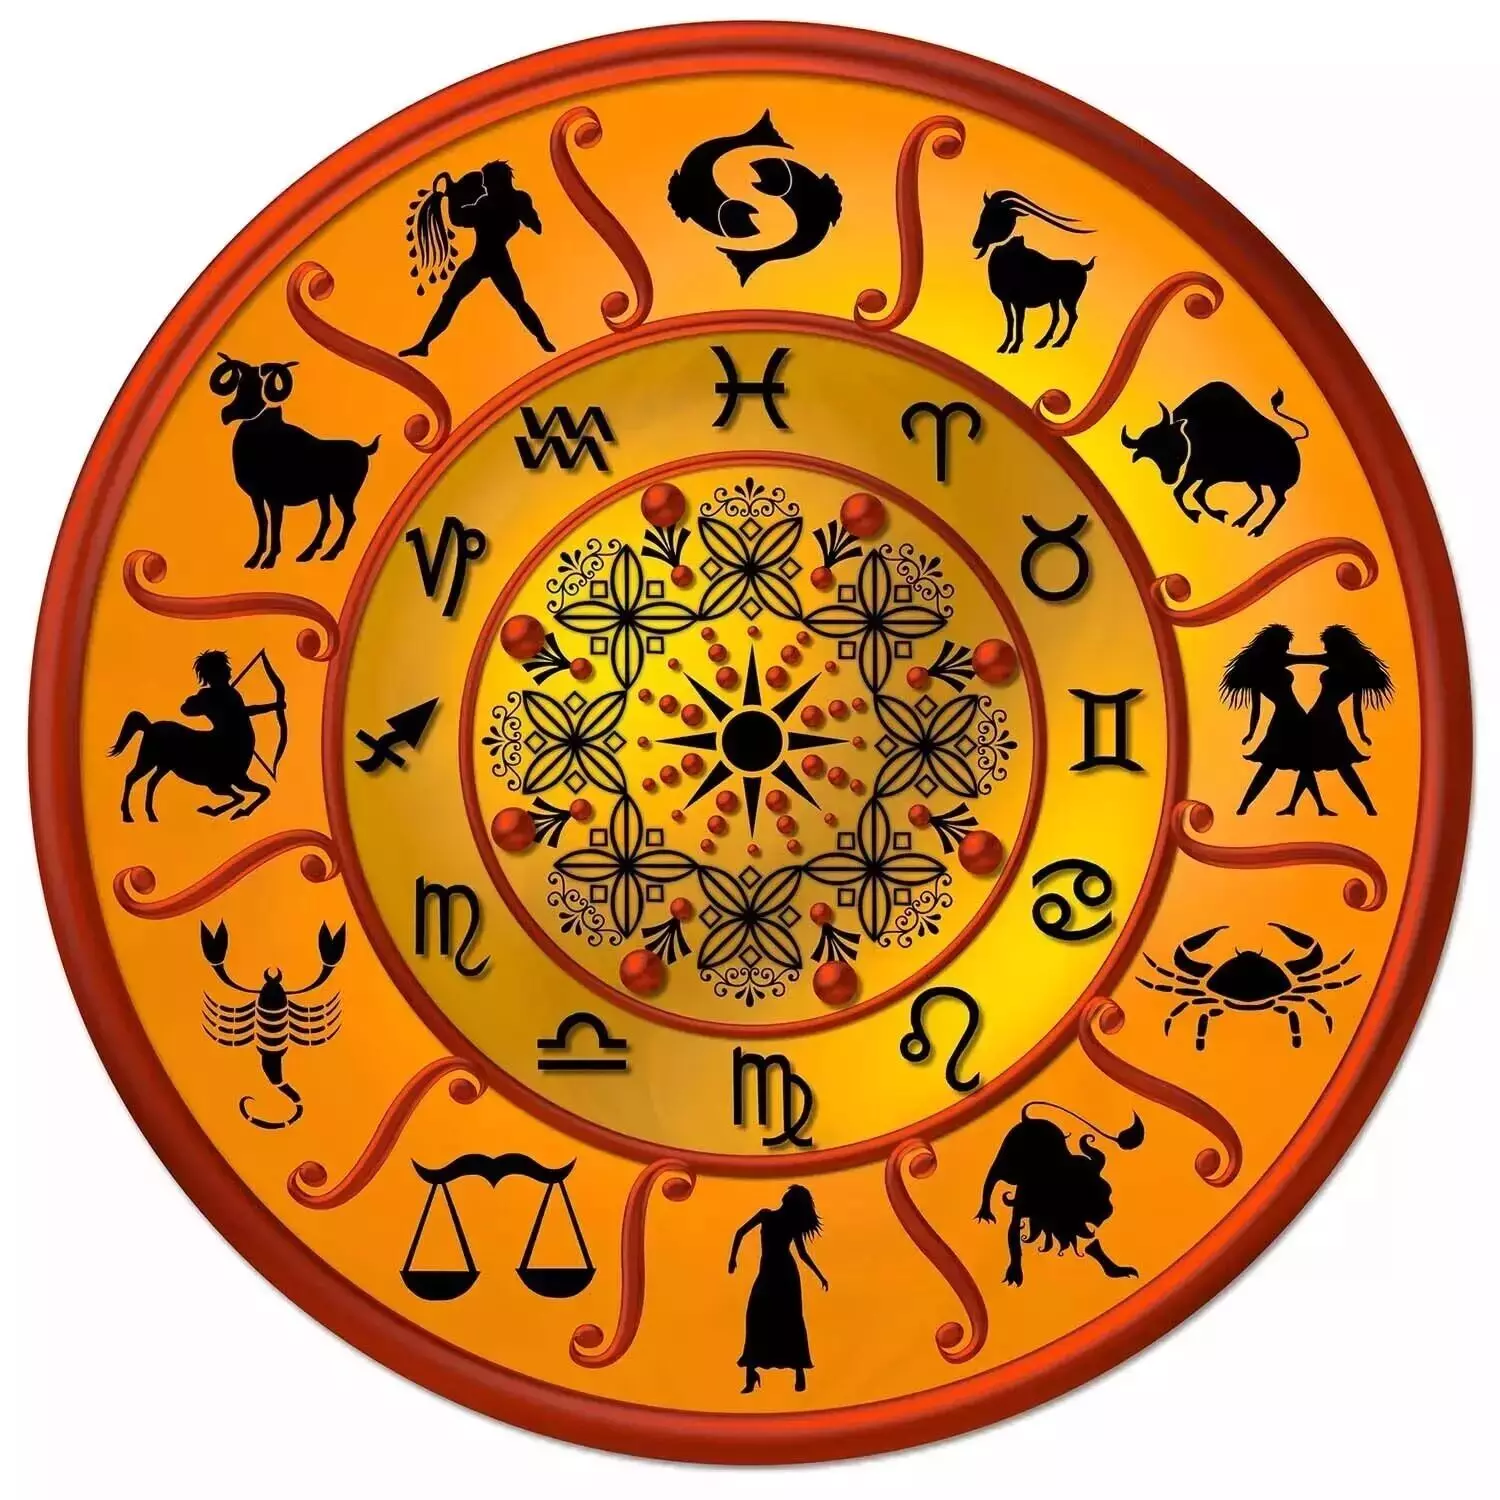 06  November – Know your todays horoscope